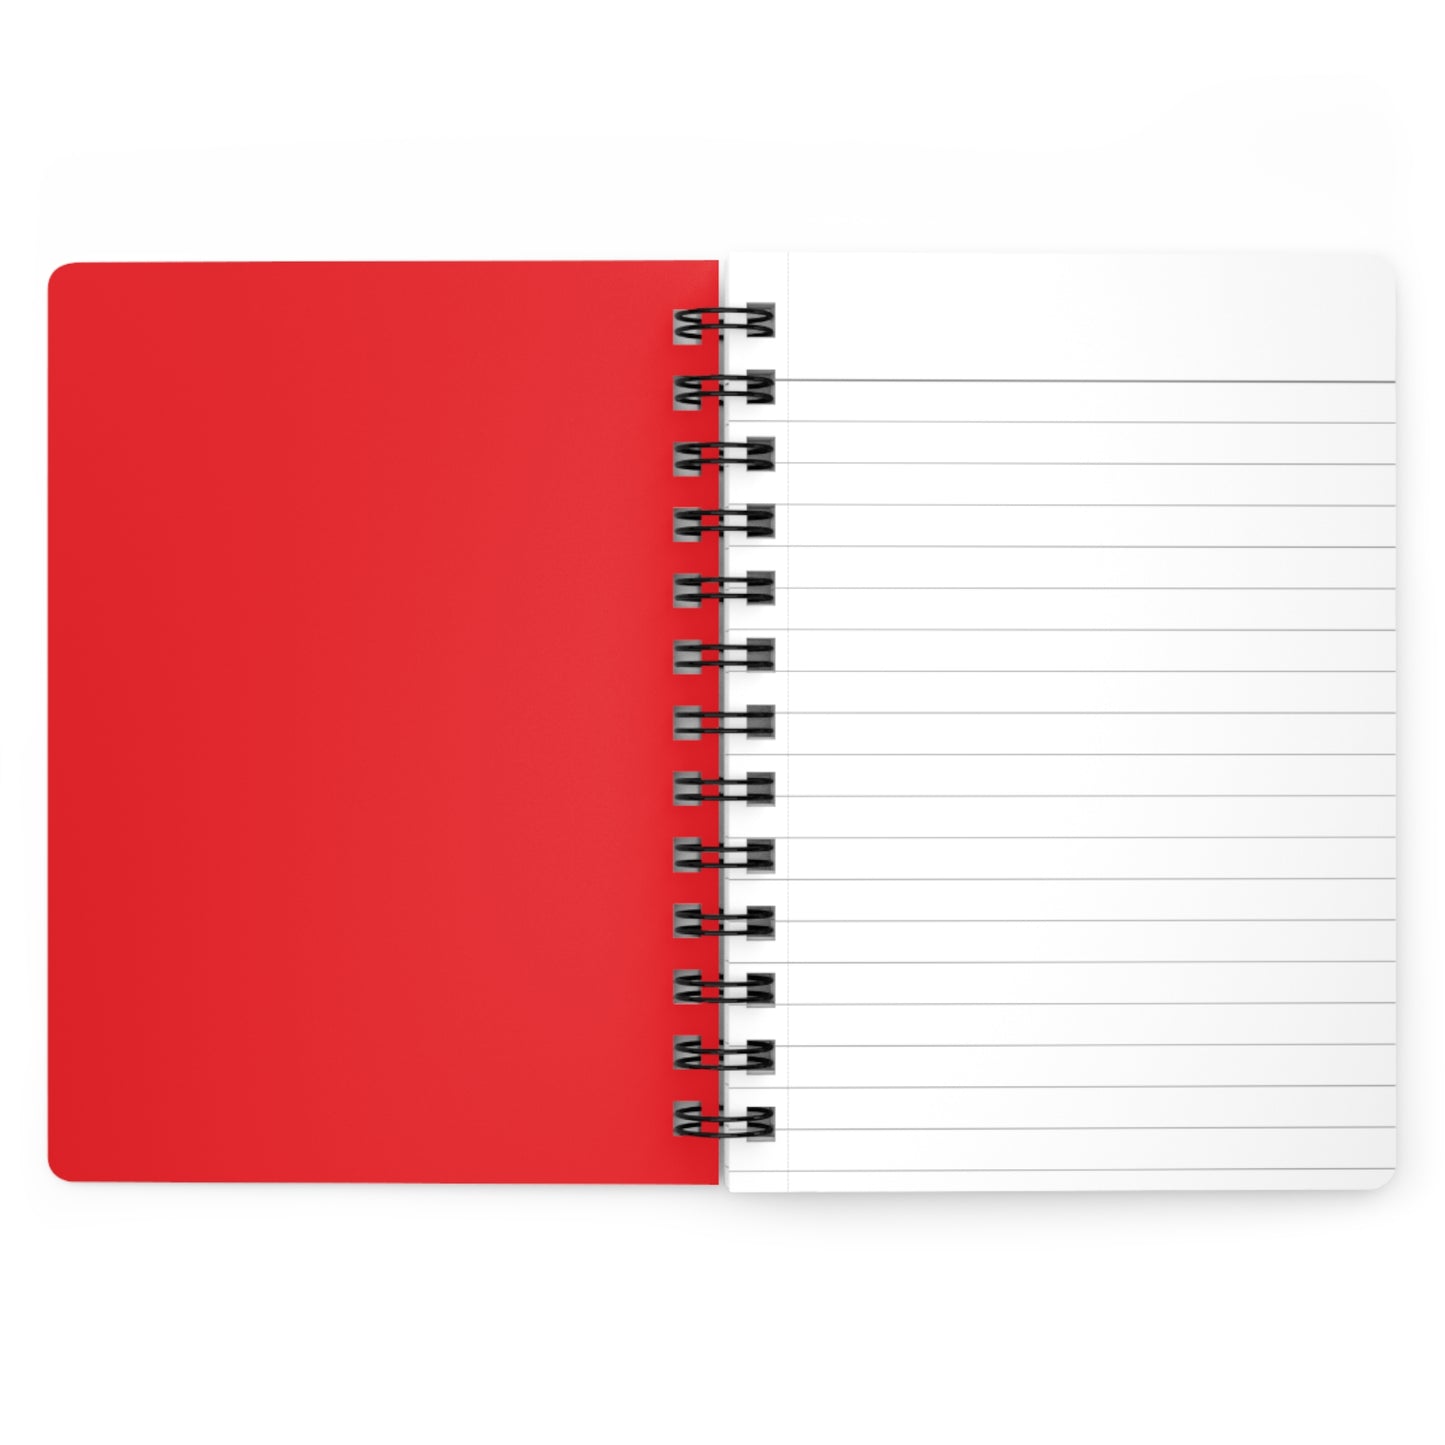 Heart - Spiral Bound Journal -Red Note pad